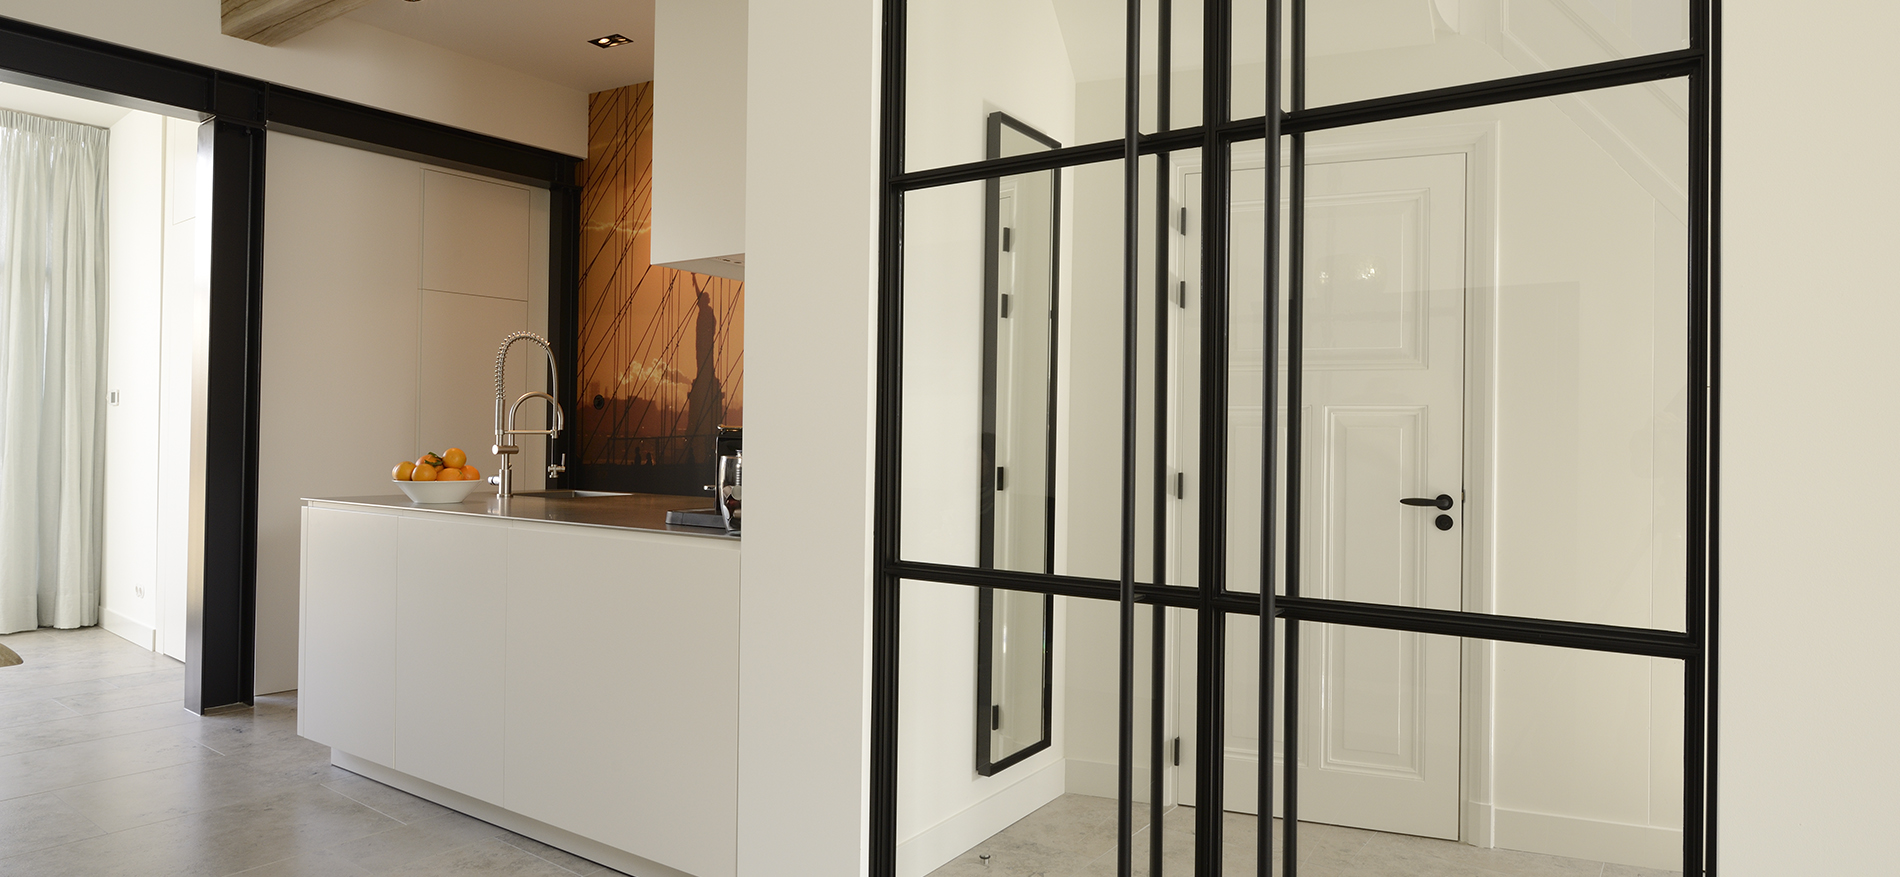 Herrenhaus Goes - Residential Interior Design